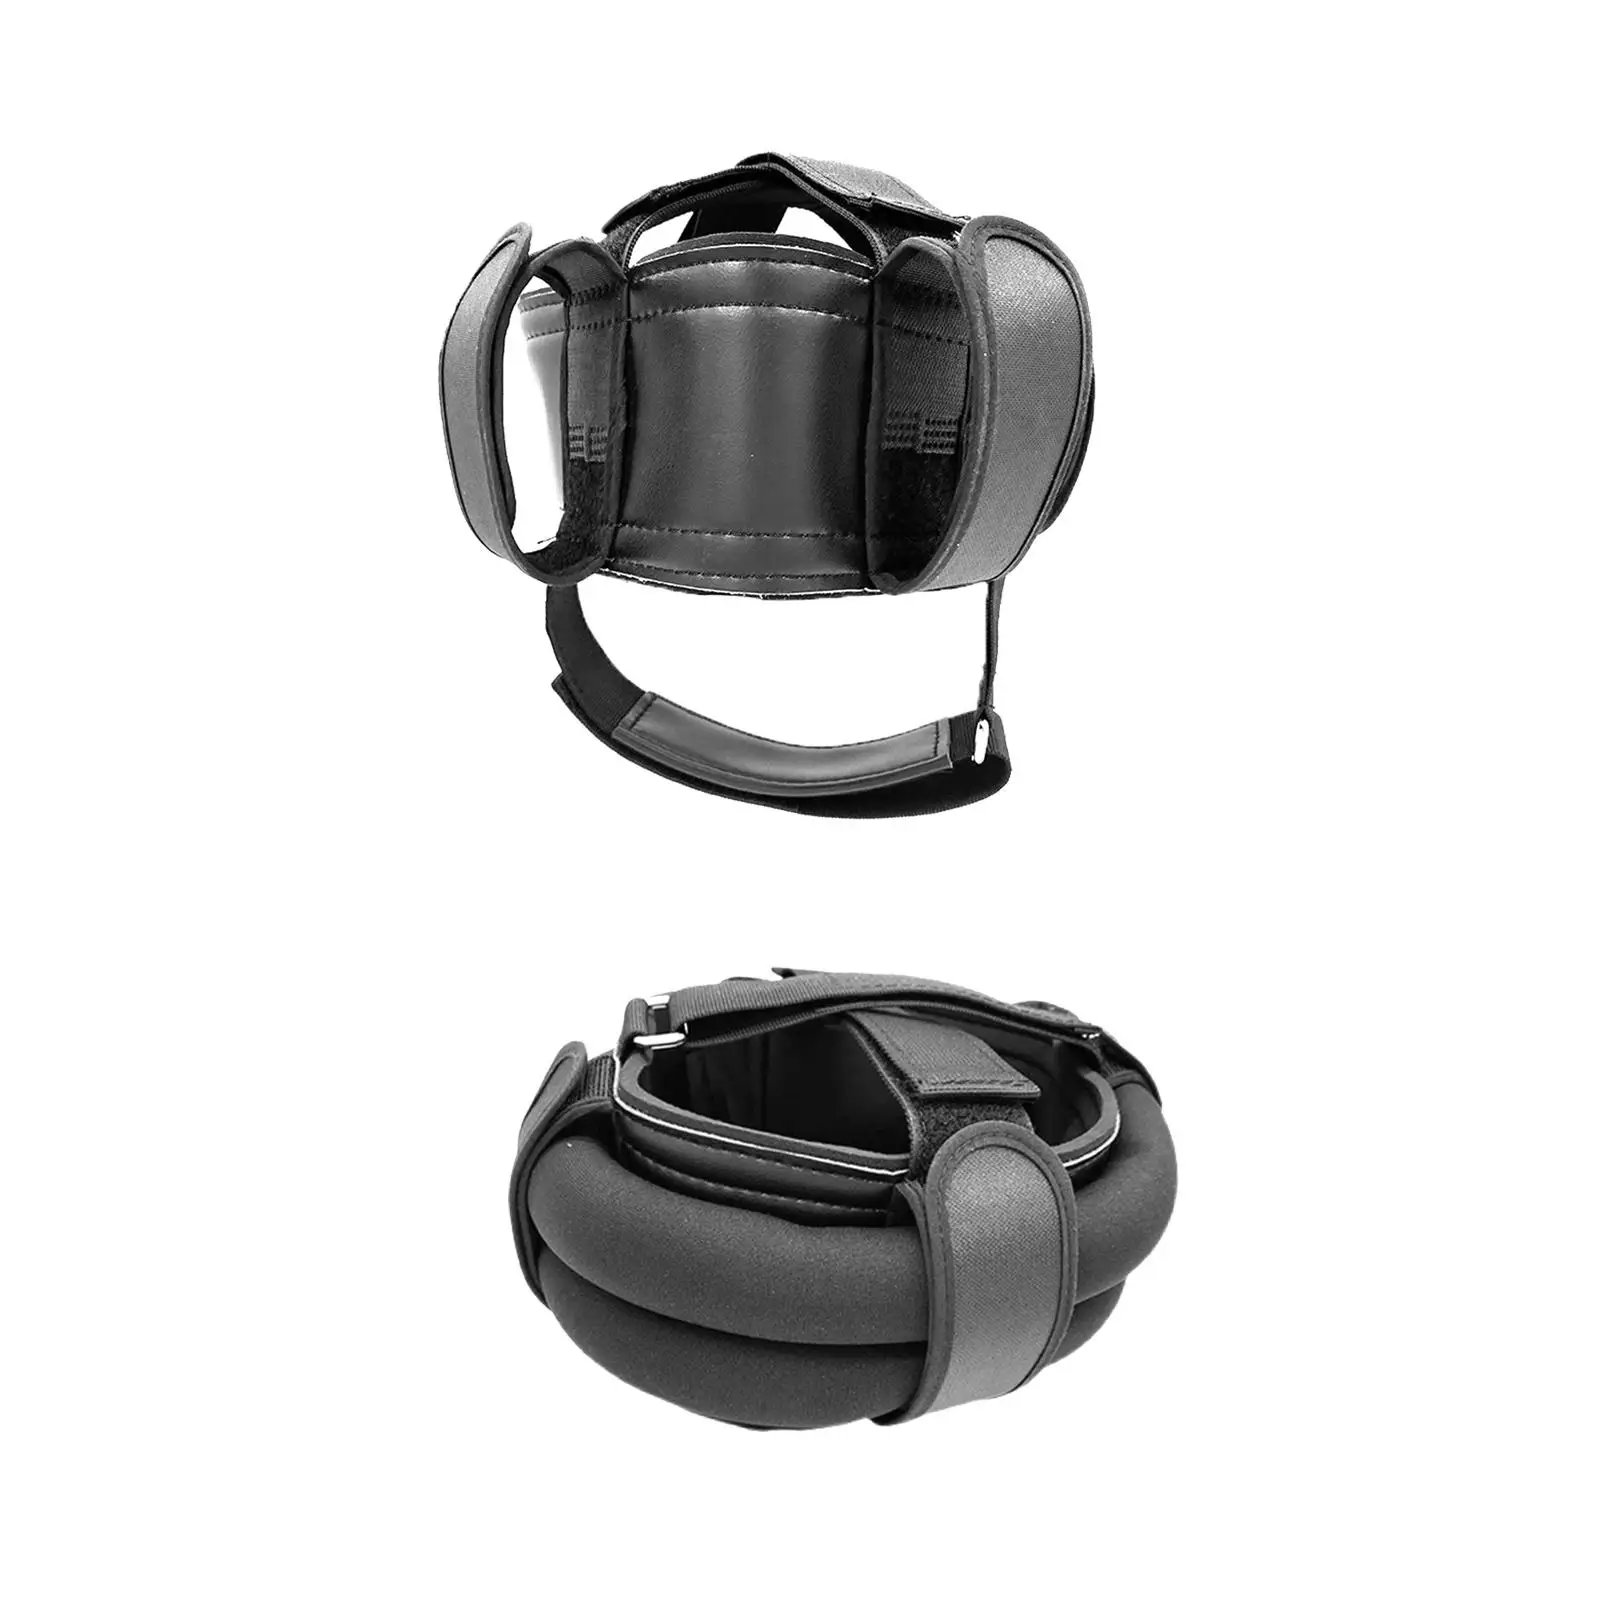 Head Neck Caps Harness Support Oxford Cloth Adjustable Equipment Head Exerciser